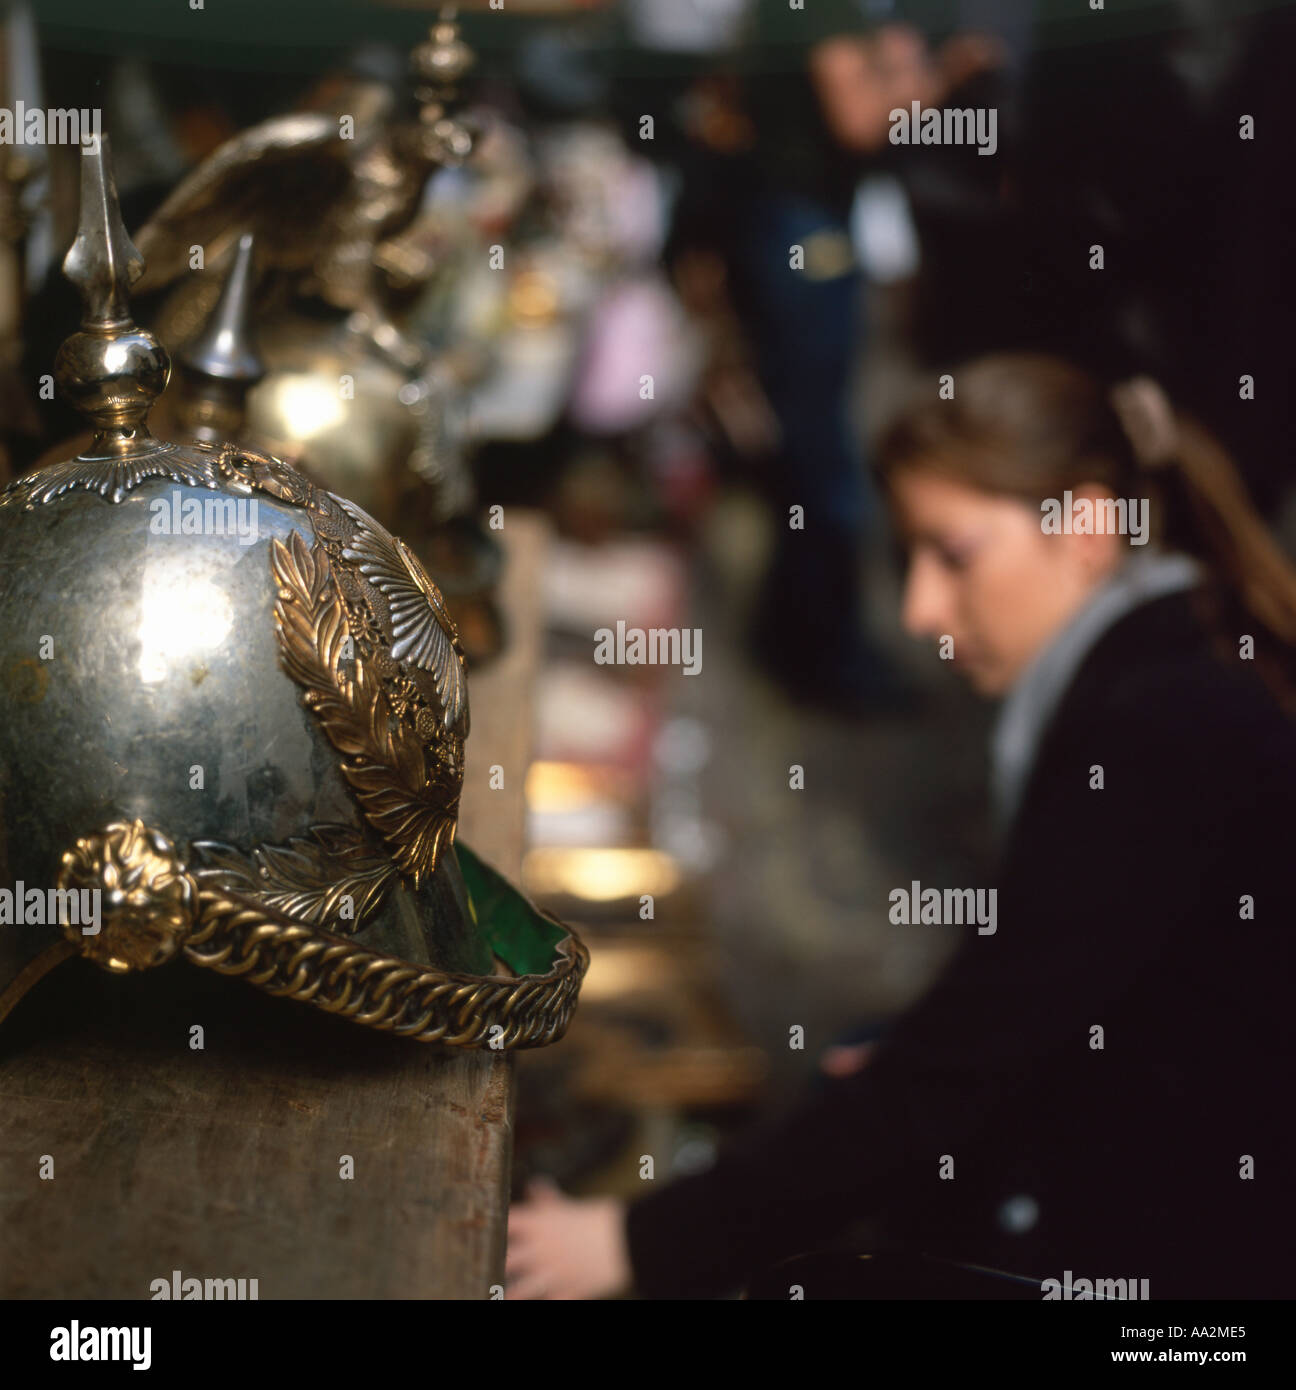 A  woman crouching near a metal Queens horse guard's helmet on display Portobello Road Market London England UK Stock Photo